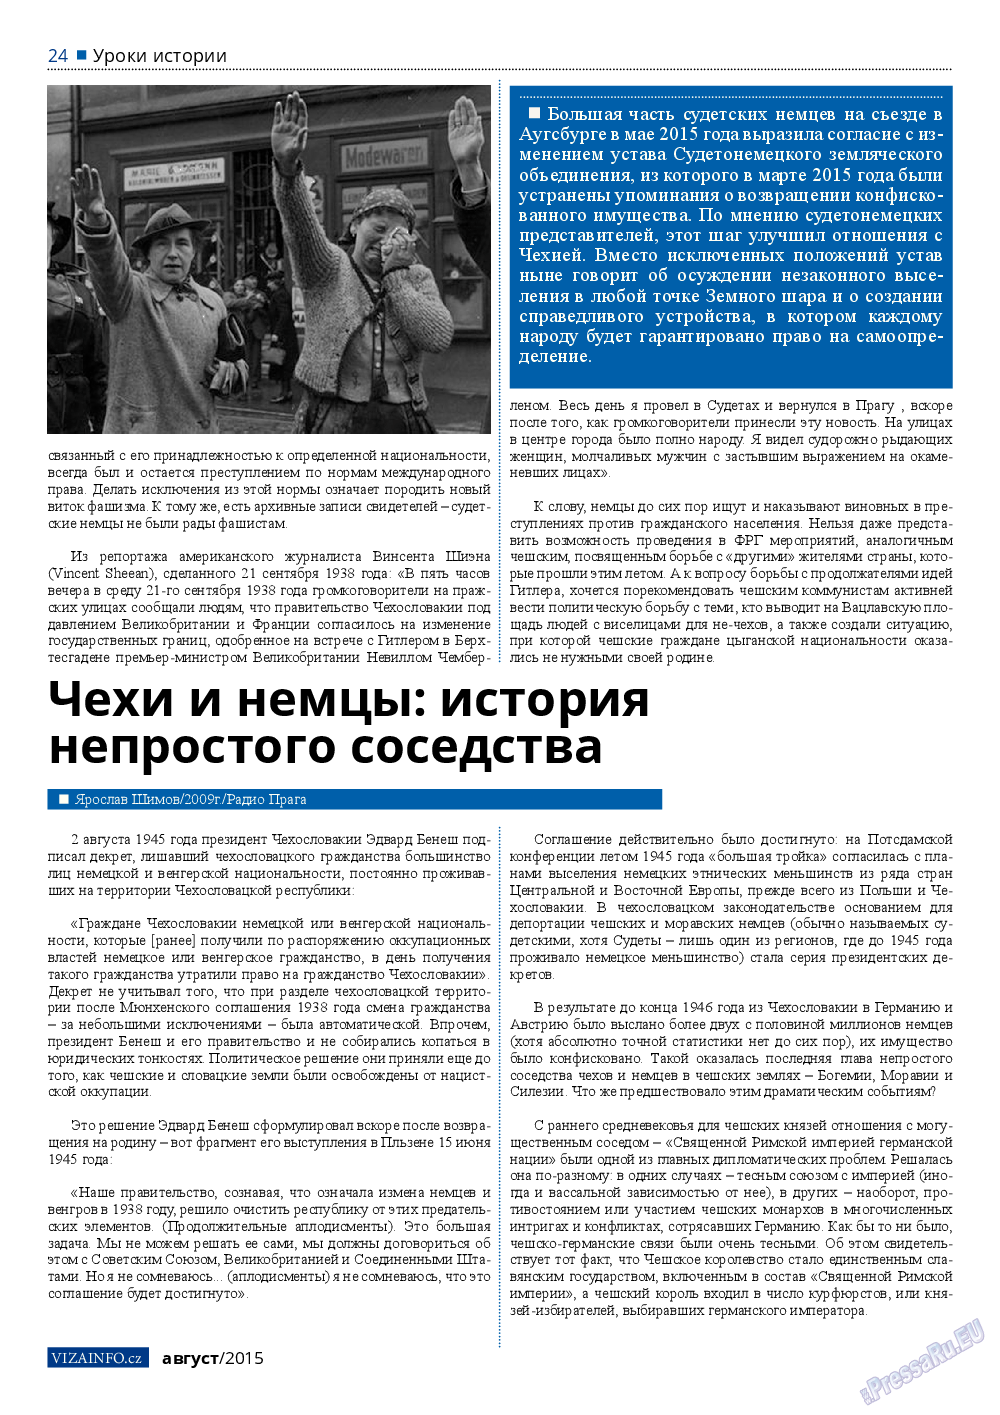 Vizainfo.cz (газета). 2015 год, номер 71, стр. 24